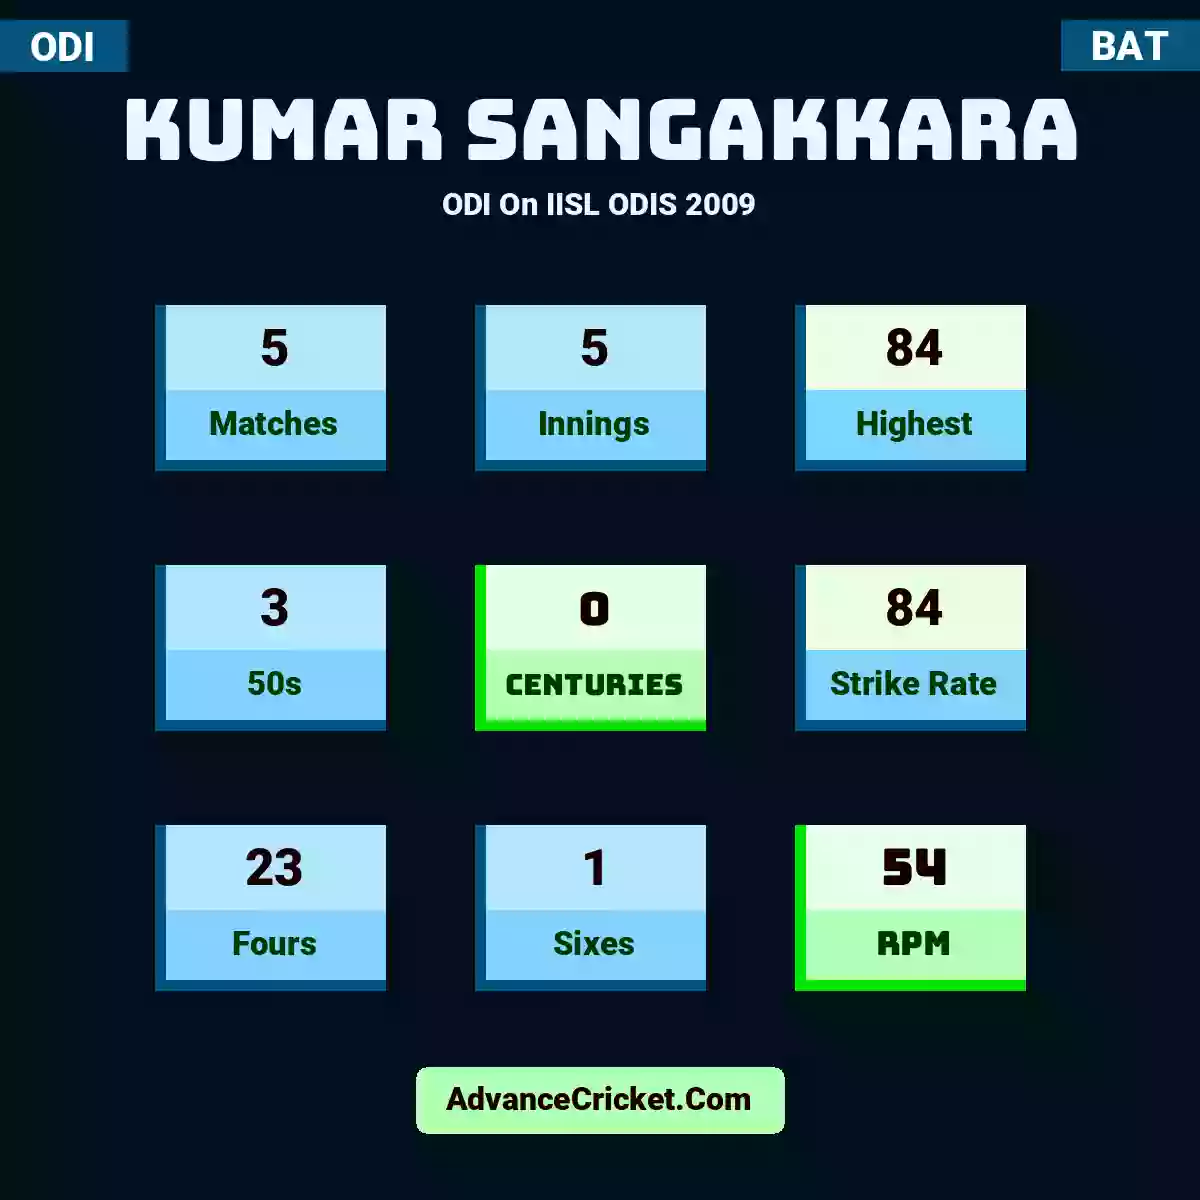 Kumar Sangakkara ODI  On IISL ODIS 2009, Kumar Sangakkara played 5 matches, scored 84 runs as highest, 3 half-centuries, and 0 centuries, with a strike rate of 84. K.Sangakkara hit 23 fours and 1 sixes, with an RPM of 54.